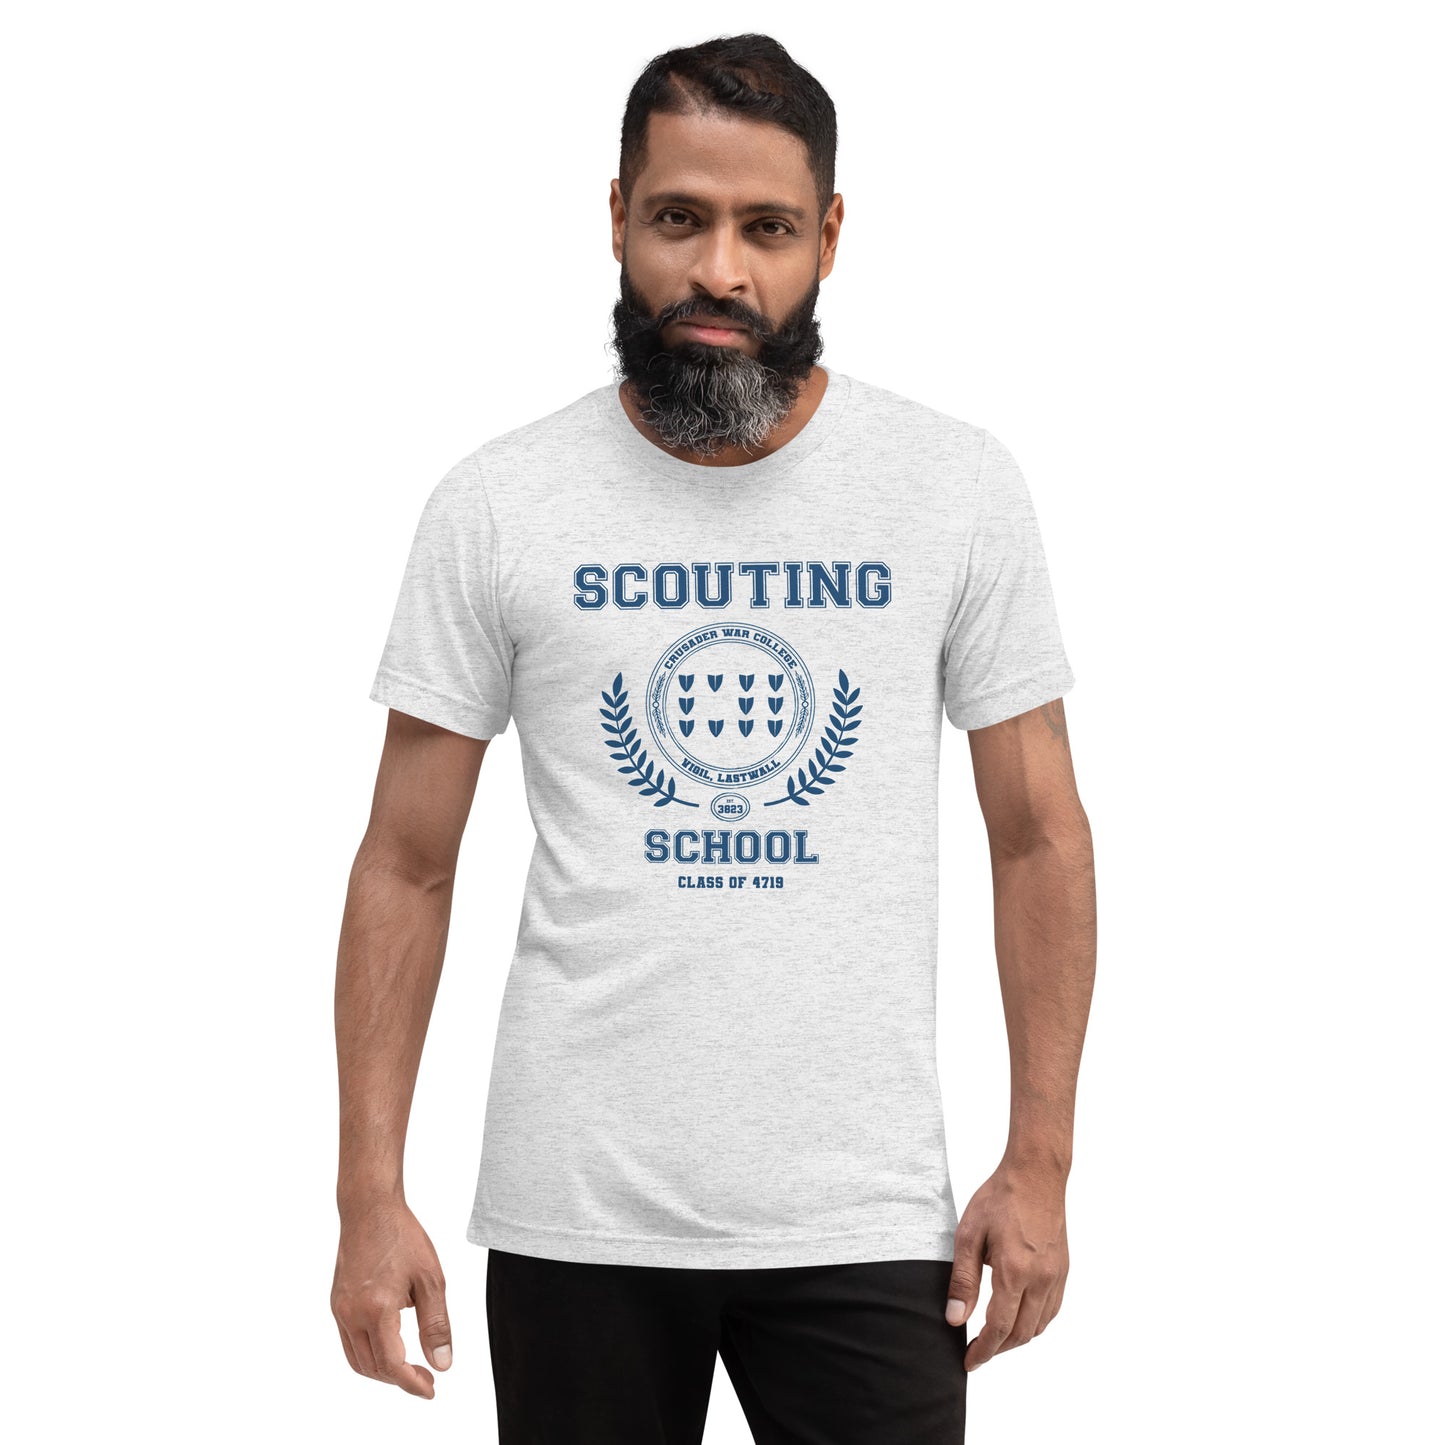 Crusader War College Shirt - Scouting School